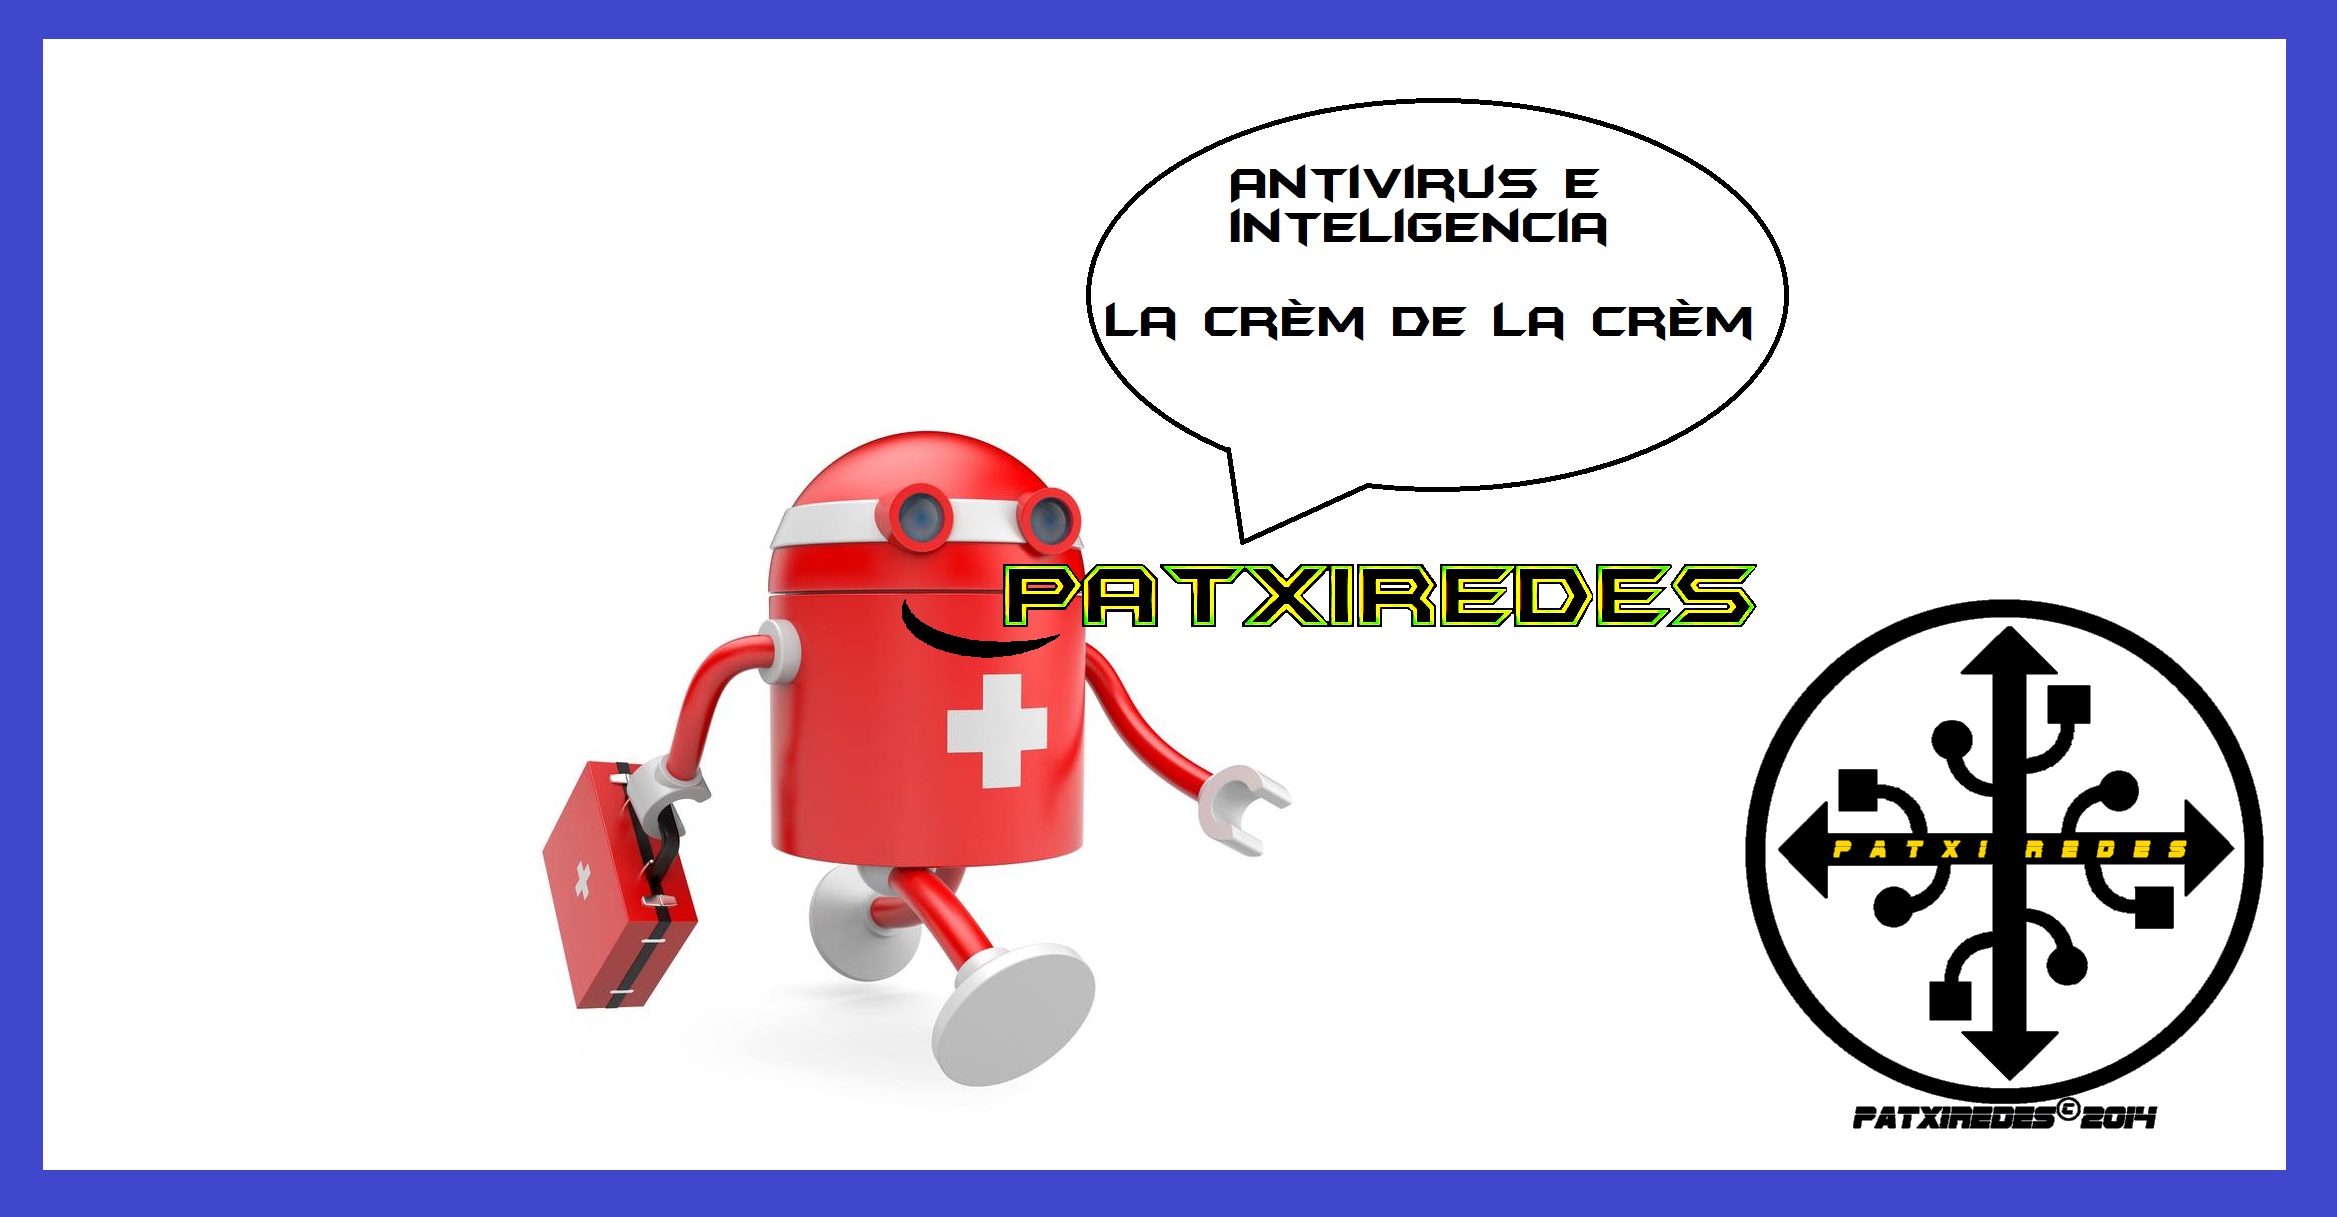 2 Antivirus e inteligencia, la crèm de la crèm @patxiredes.jpg